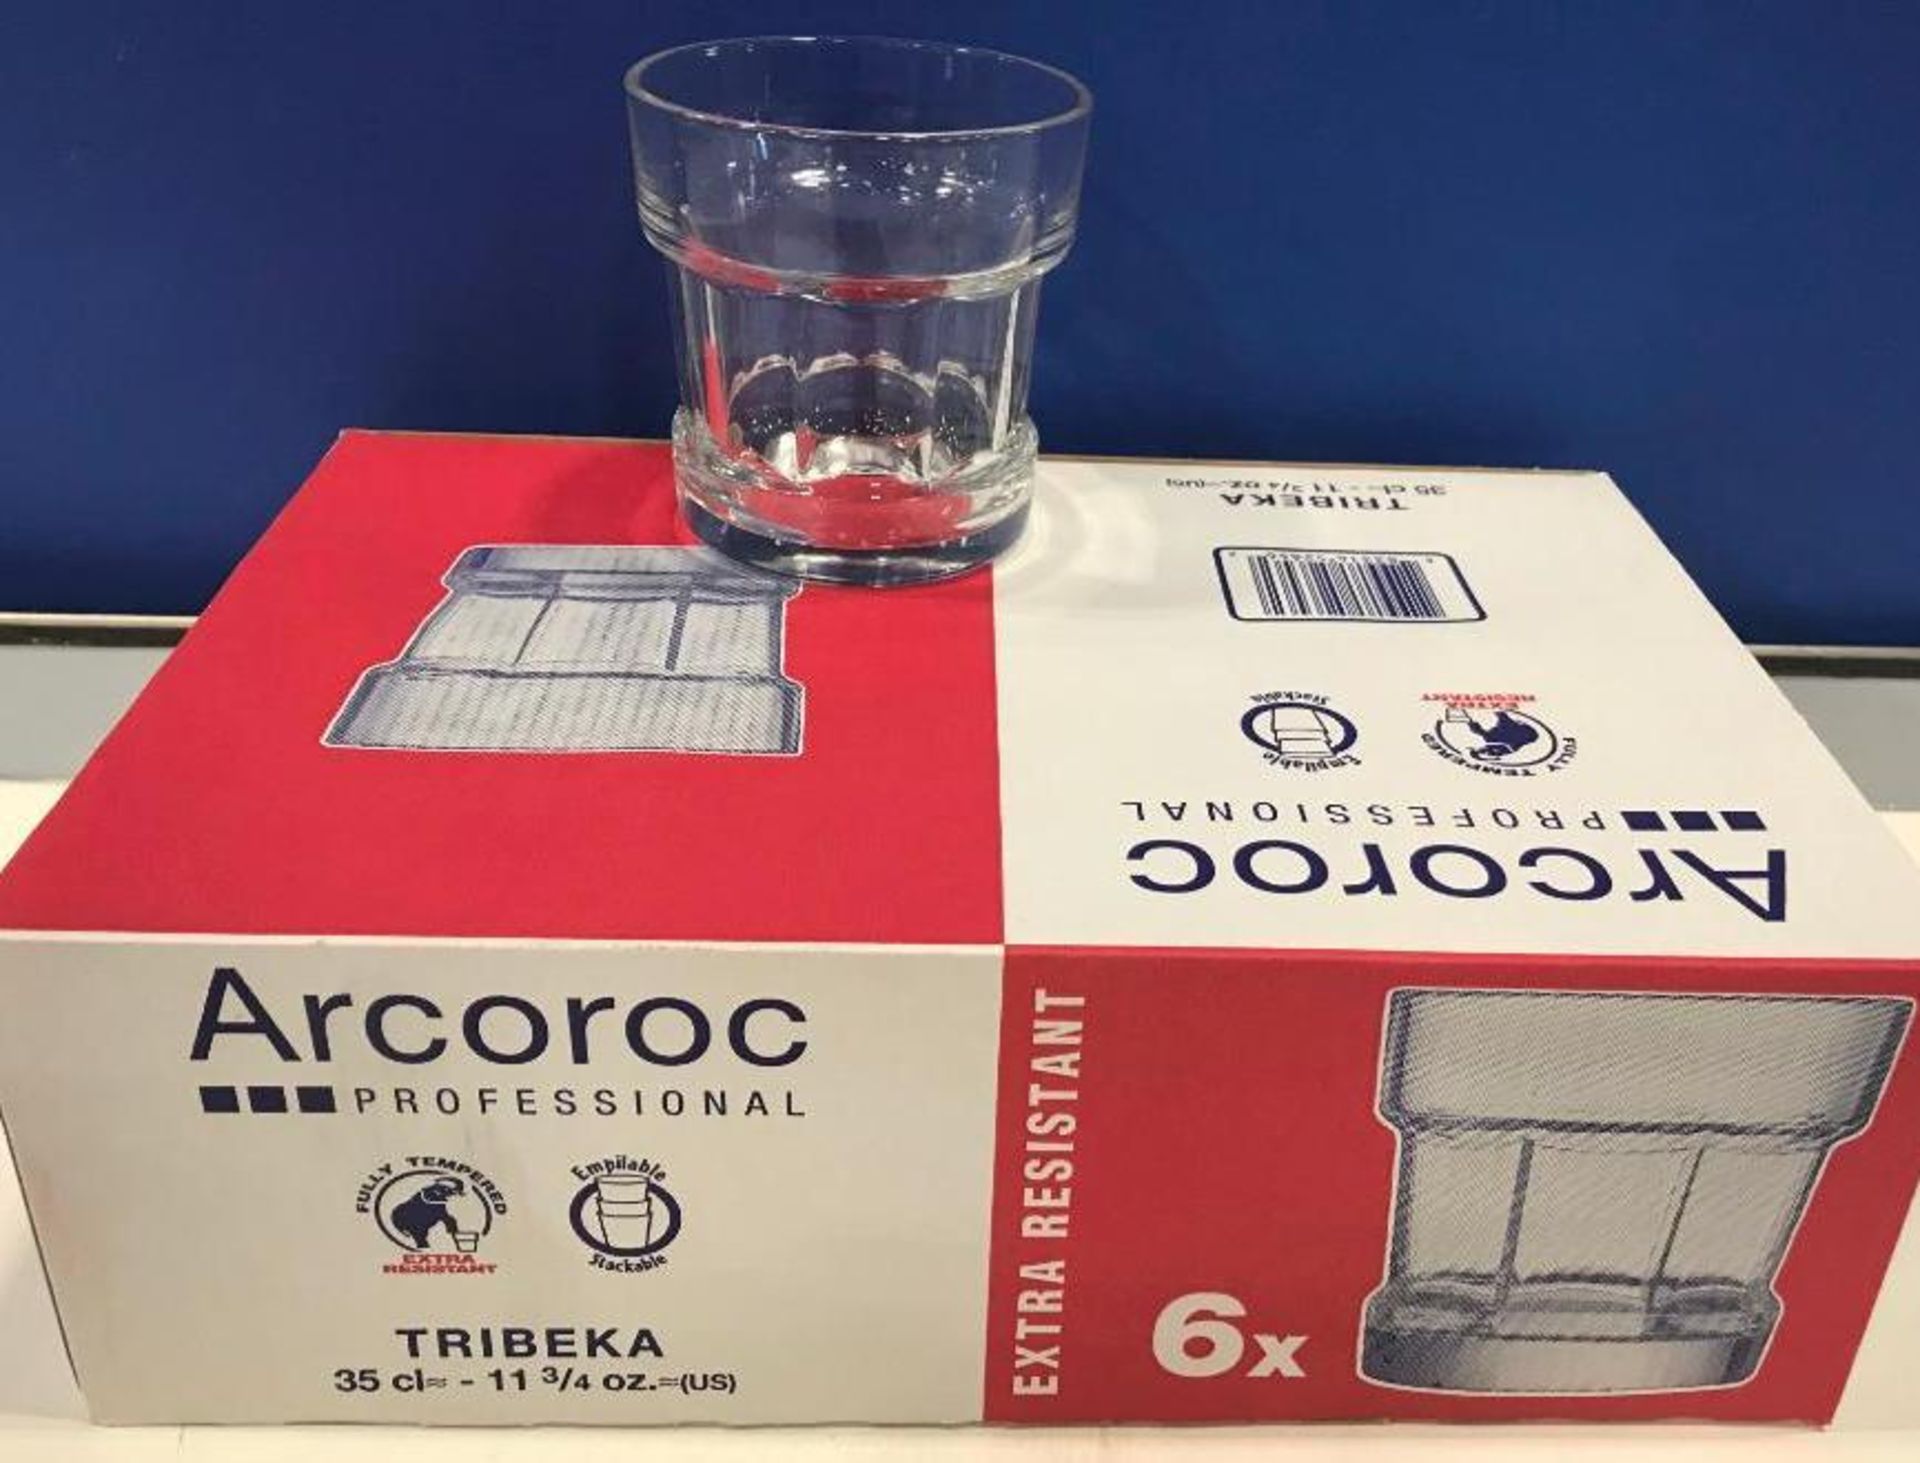 TRIBEKA 11 OZ ROCK GLASSES, ARCOROC L4253, BOX OF 6 - NEW - Image 4 of 4